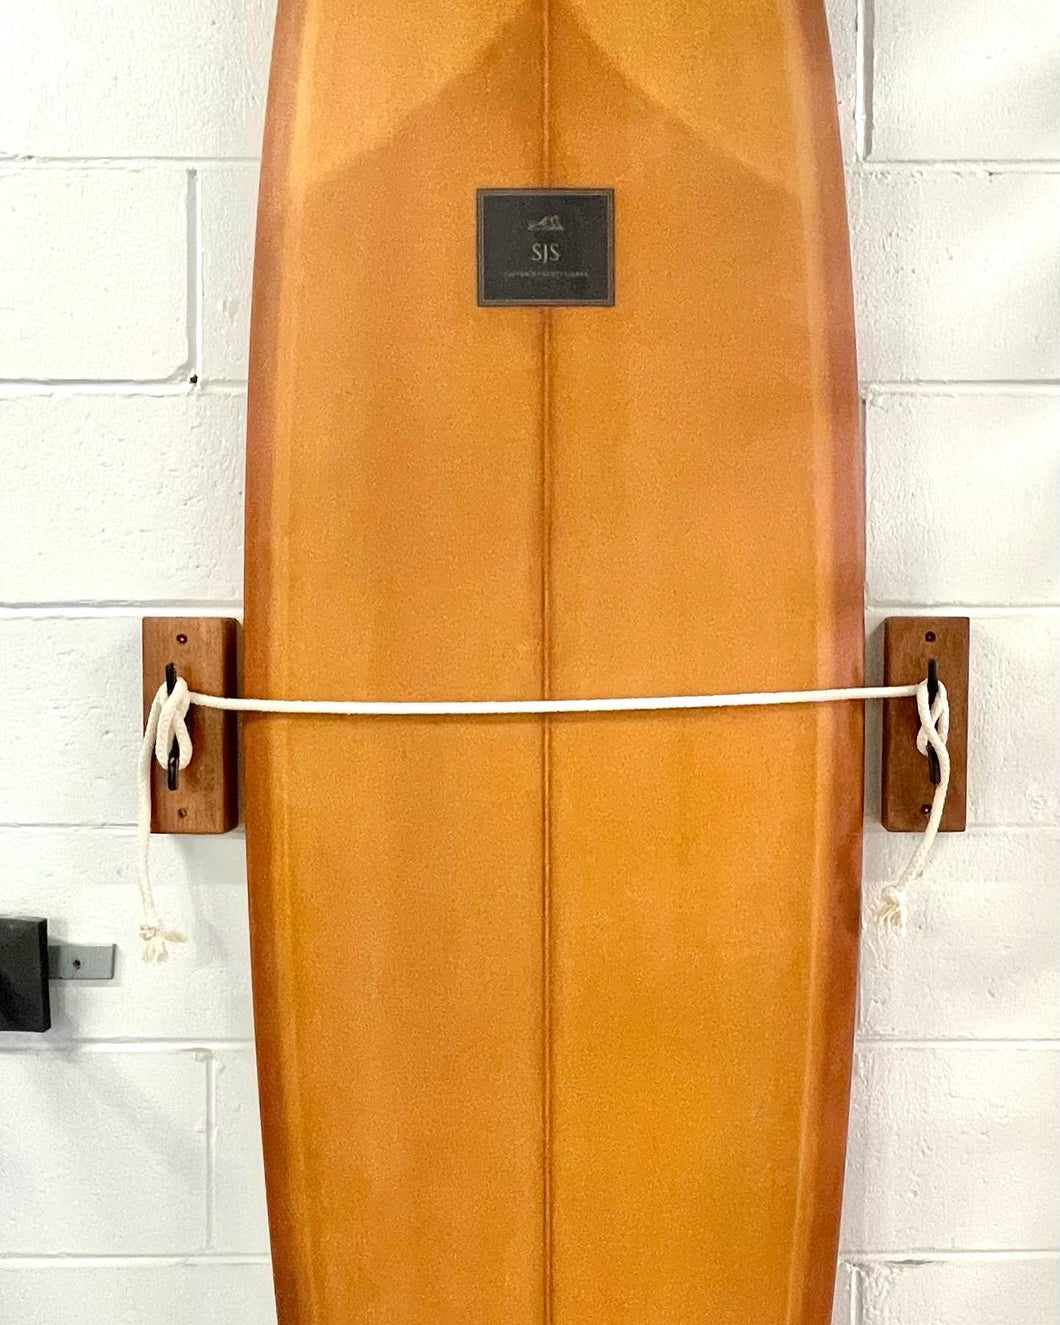 SJS Surfboard display rack